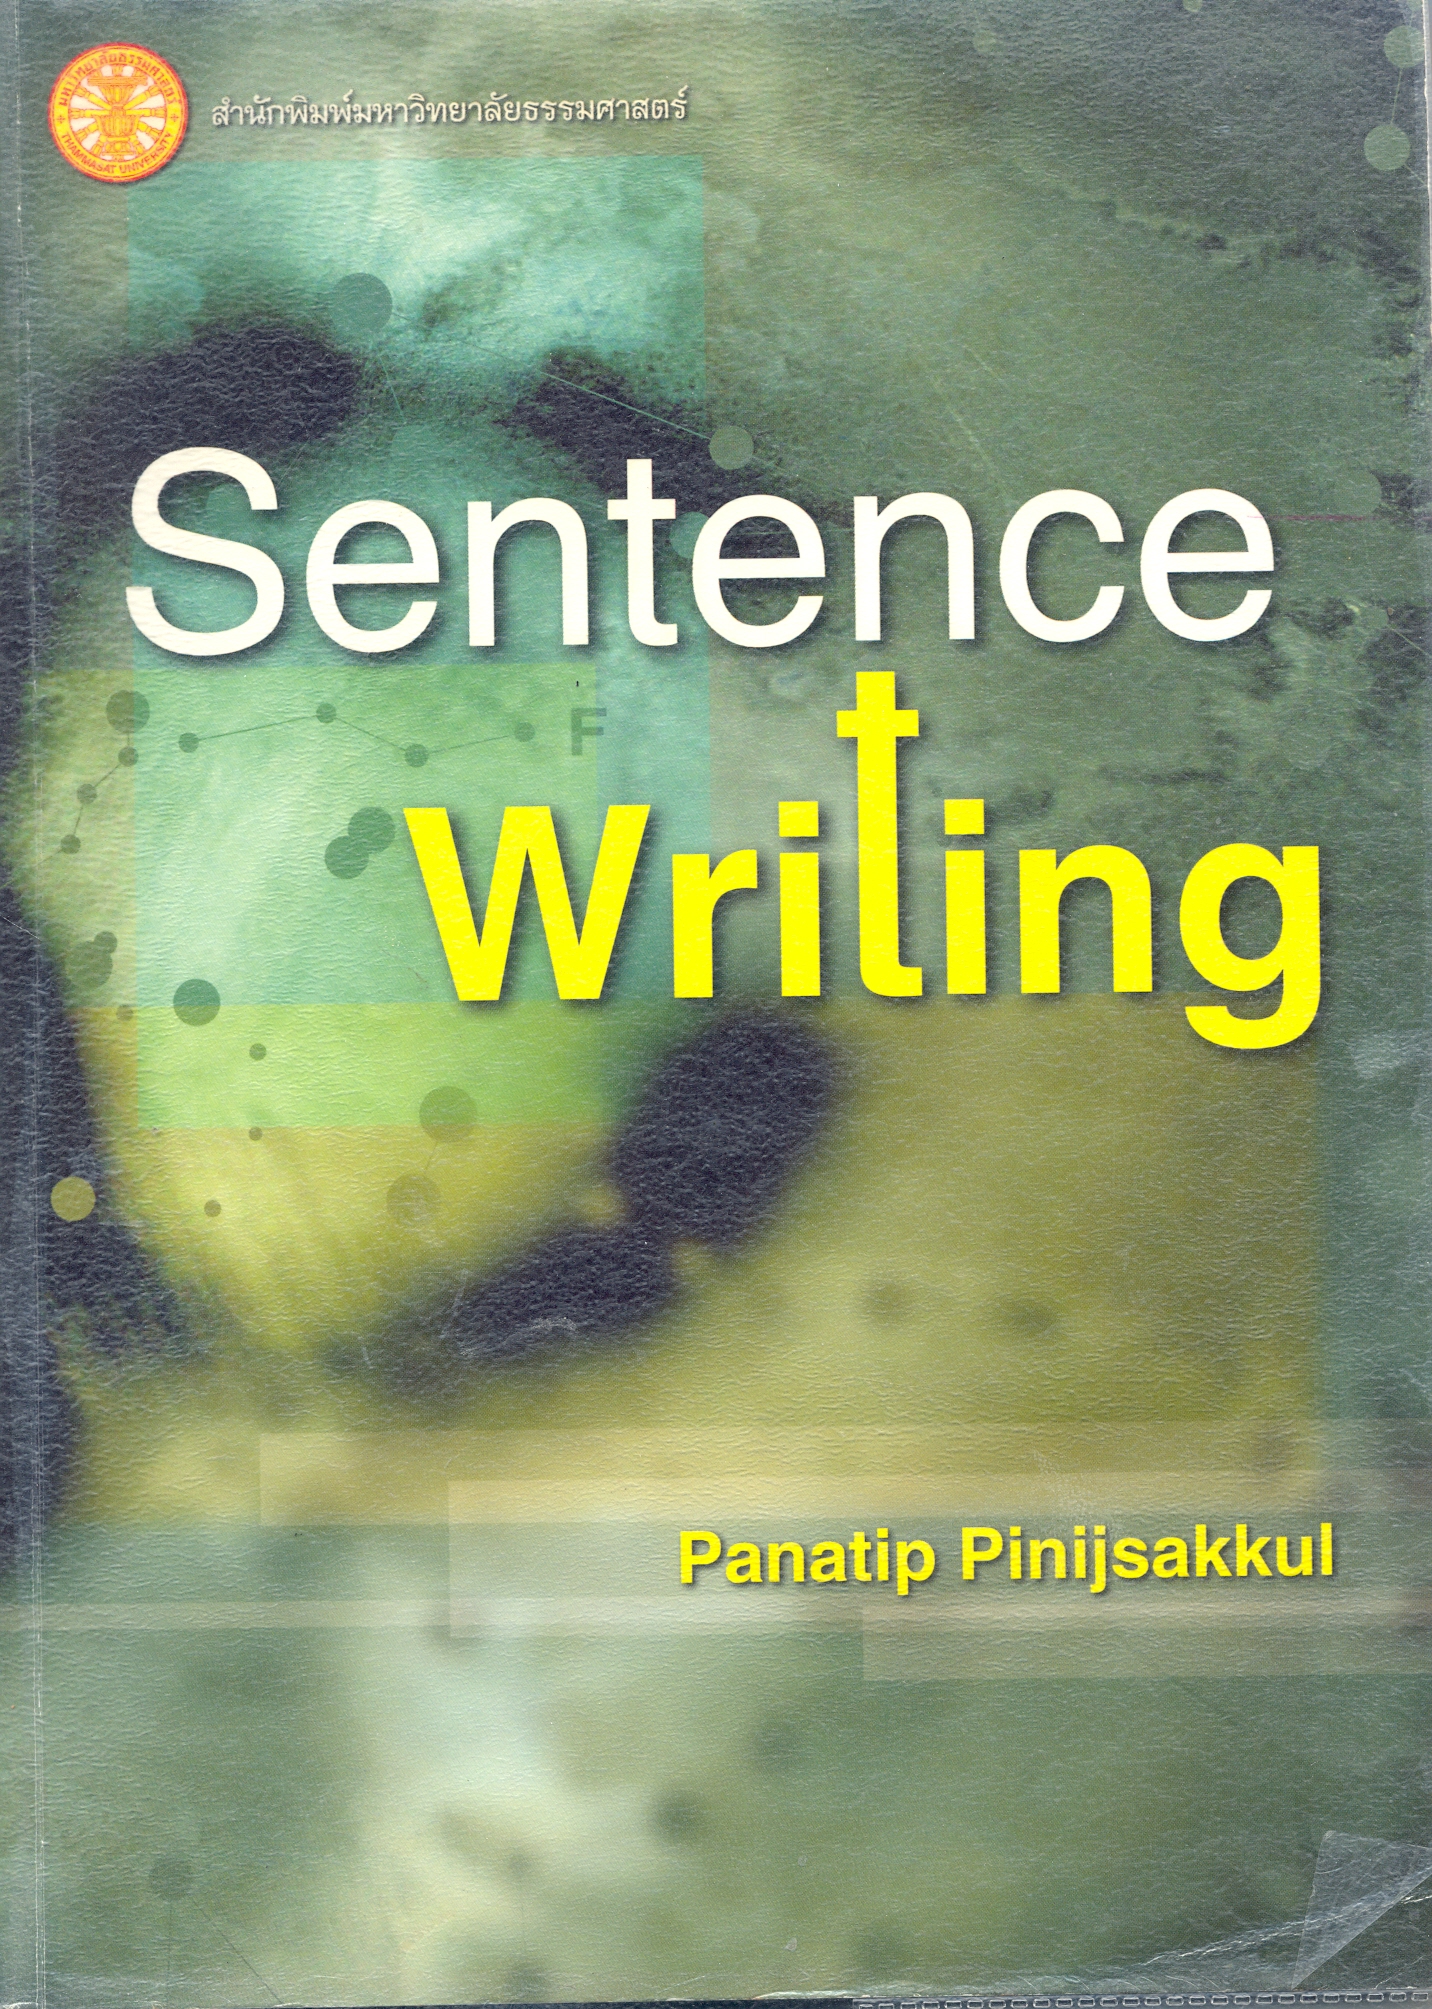 Sentence writing